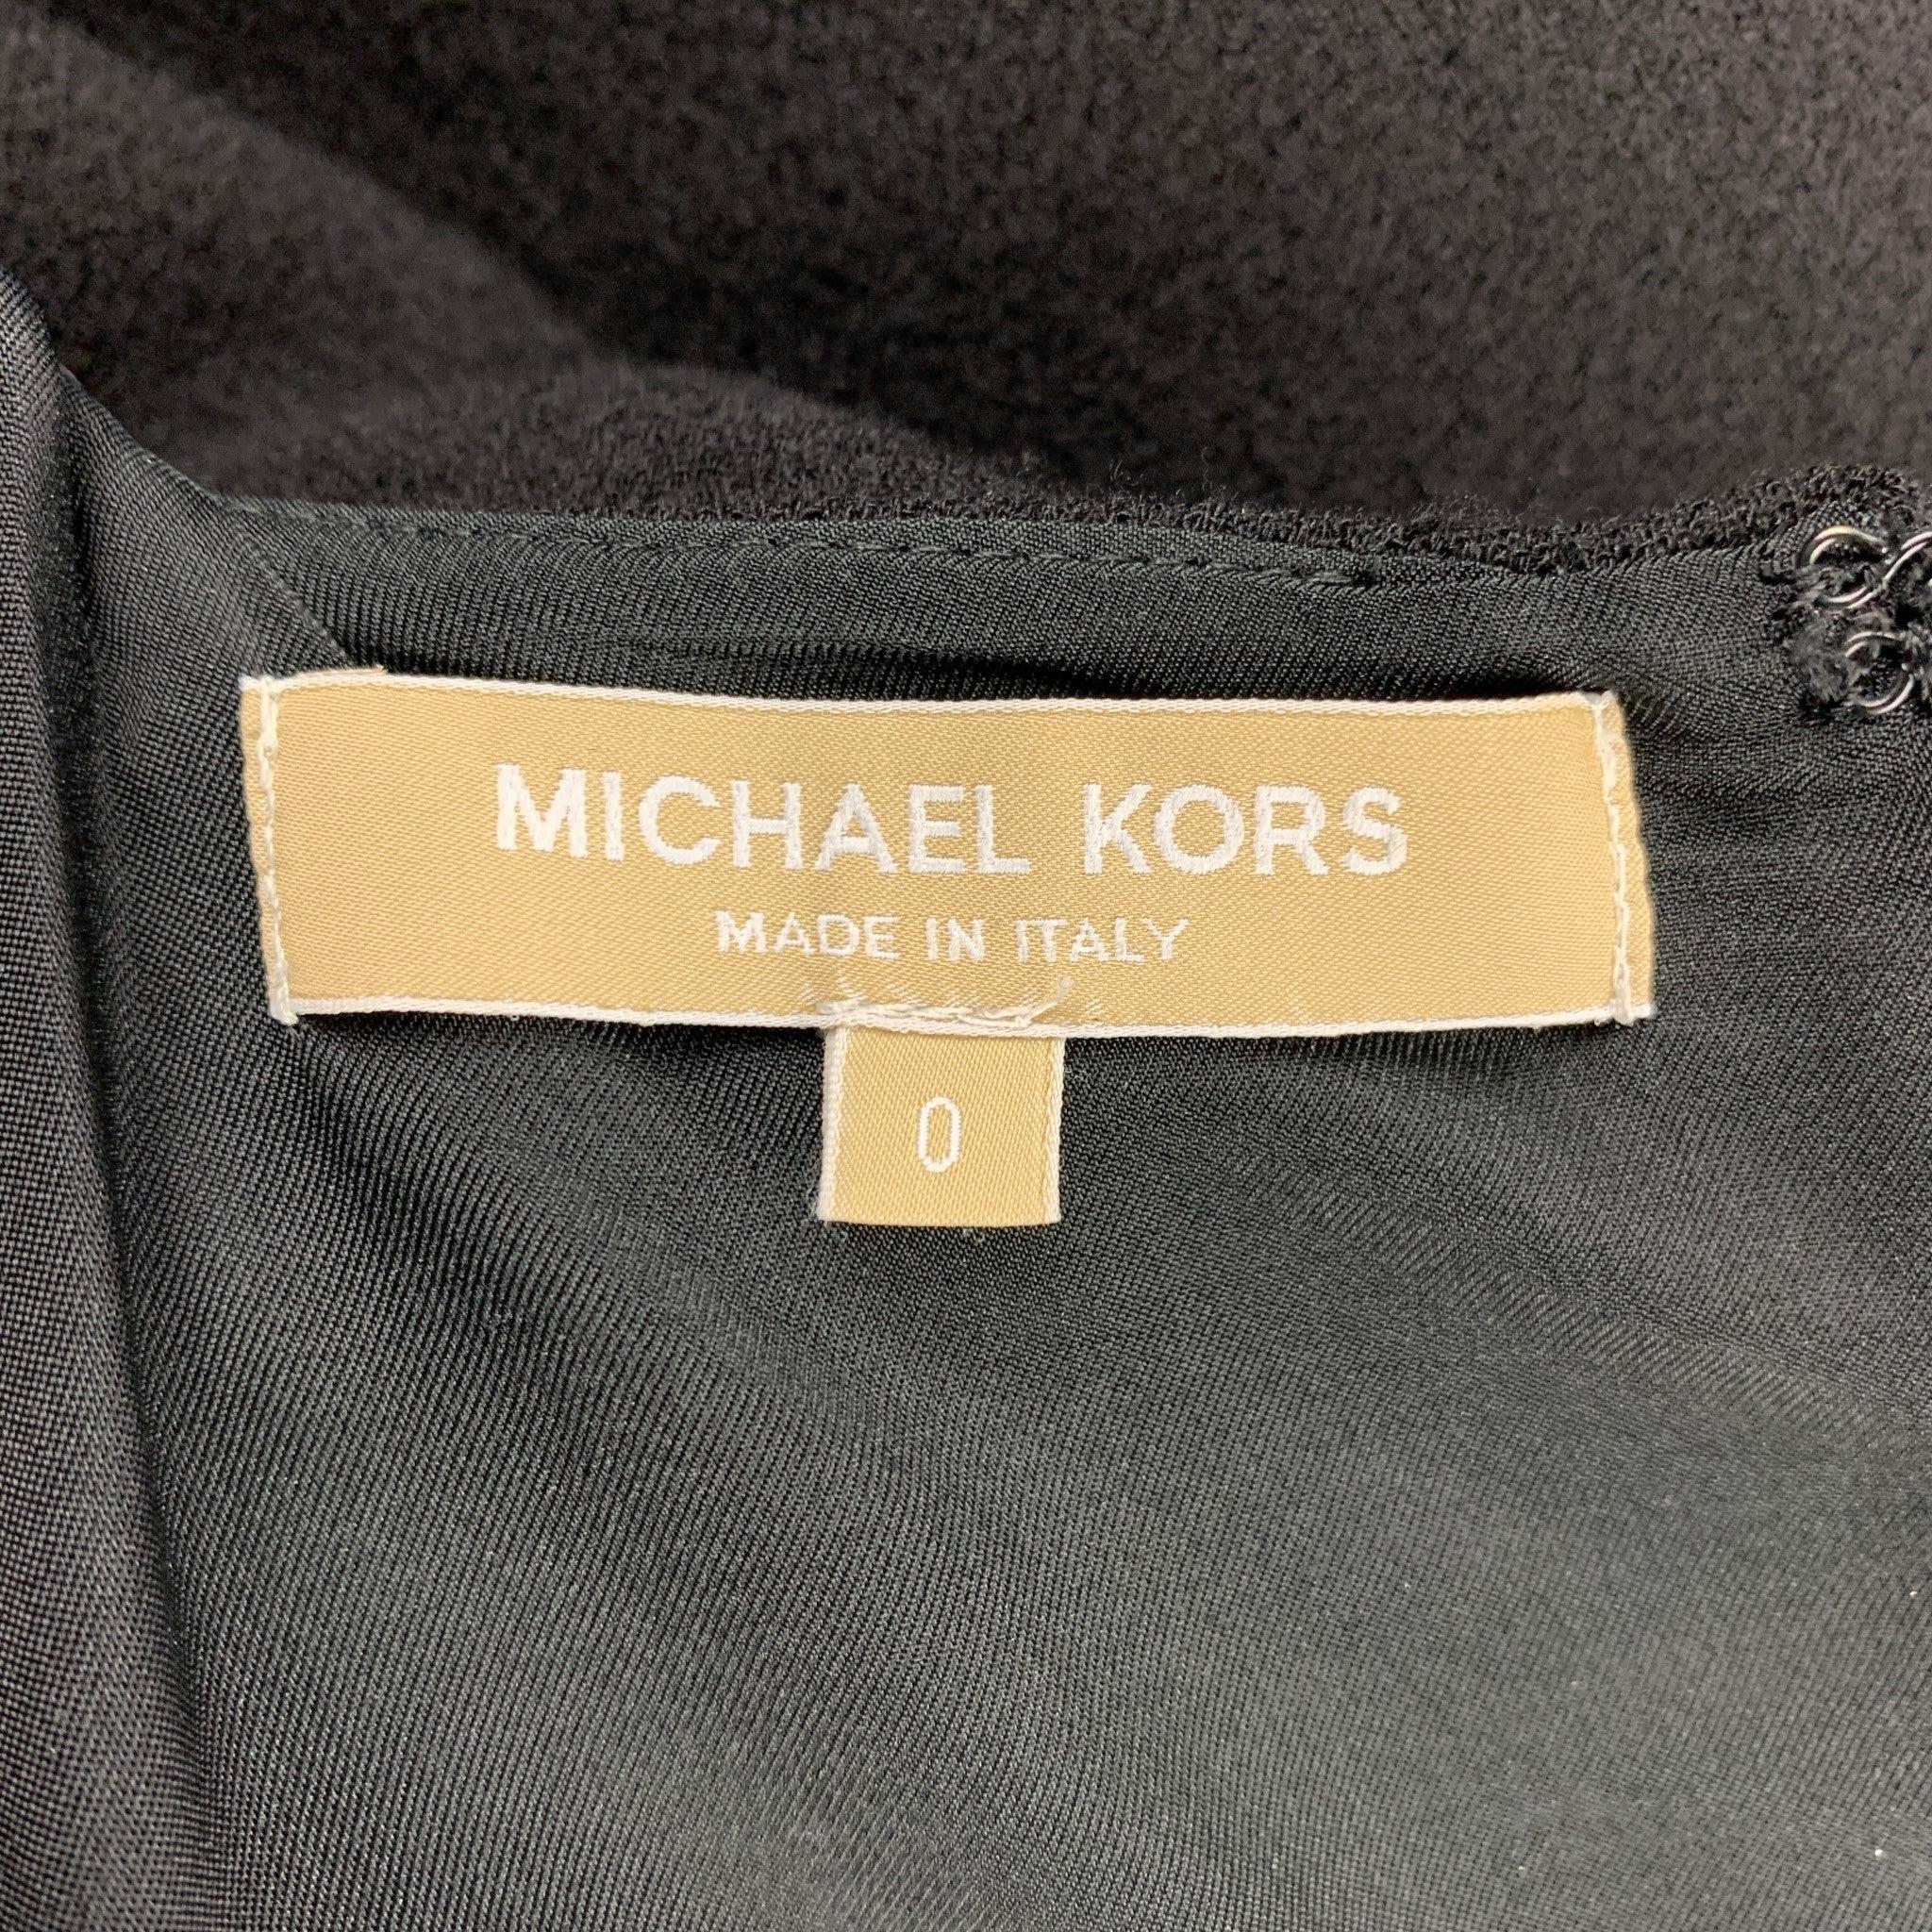 Women's MICHAEL KORS Size 0 Black Crepe Shift Dress For Sale